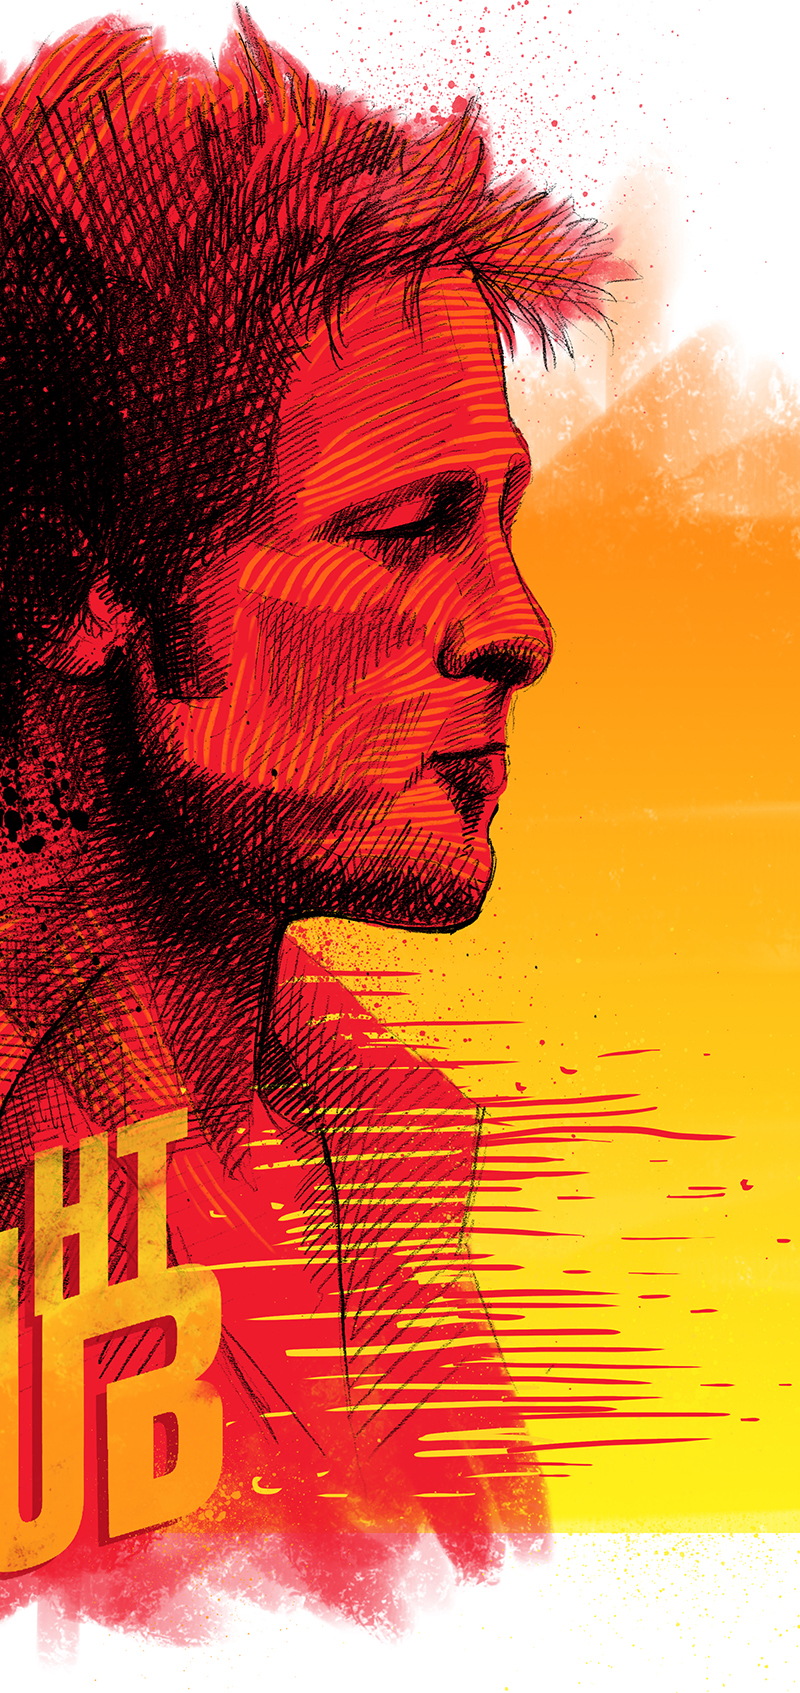 fight club Brad Pitt Edward Norton movie poster movie illustration movie poster Digital Drawing digital painting movie art art